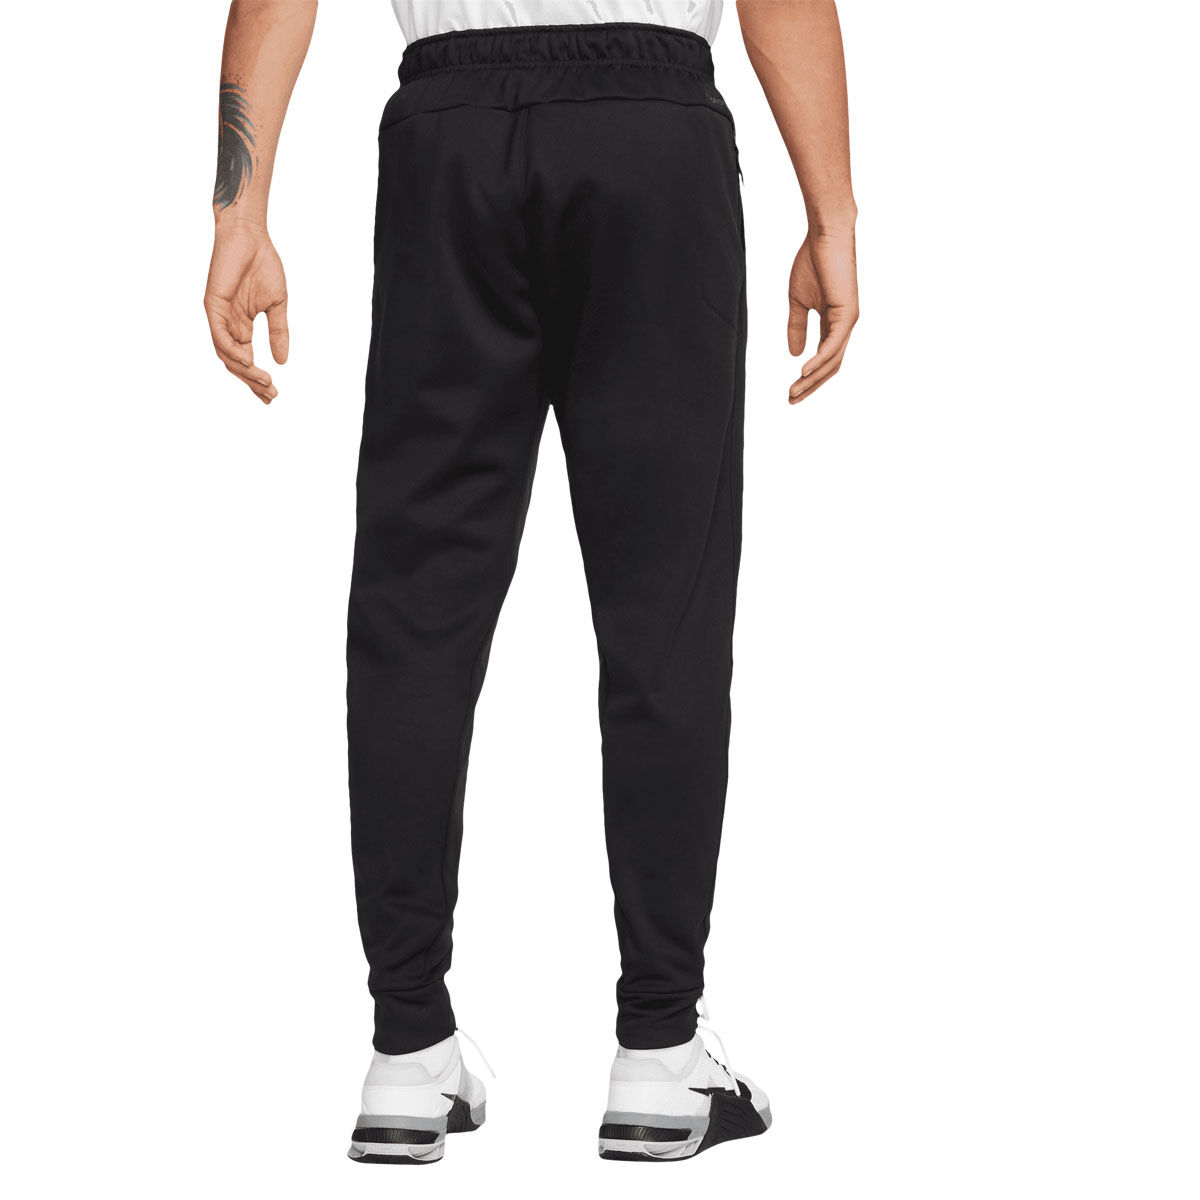 Nike Sprinter Pants in Black Back View